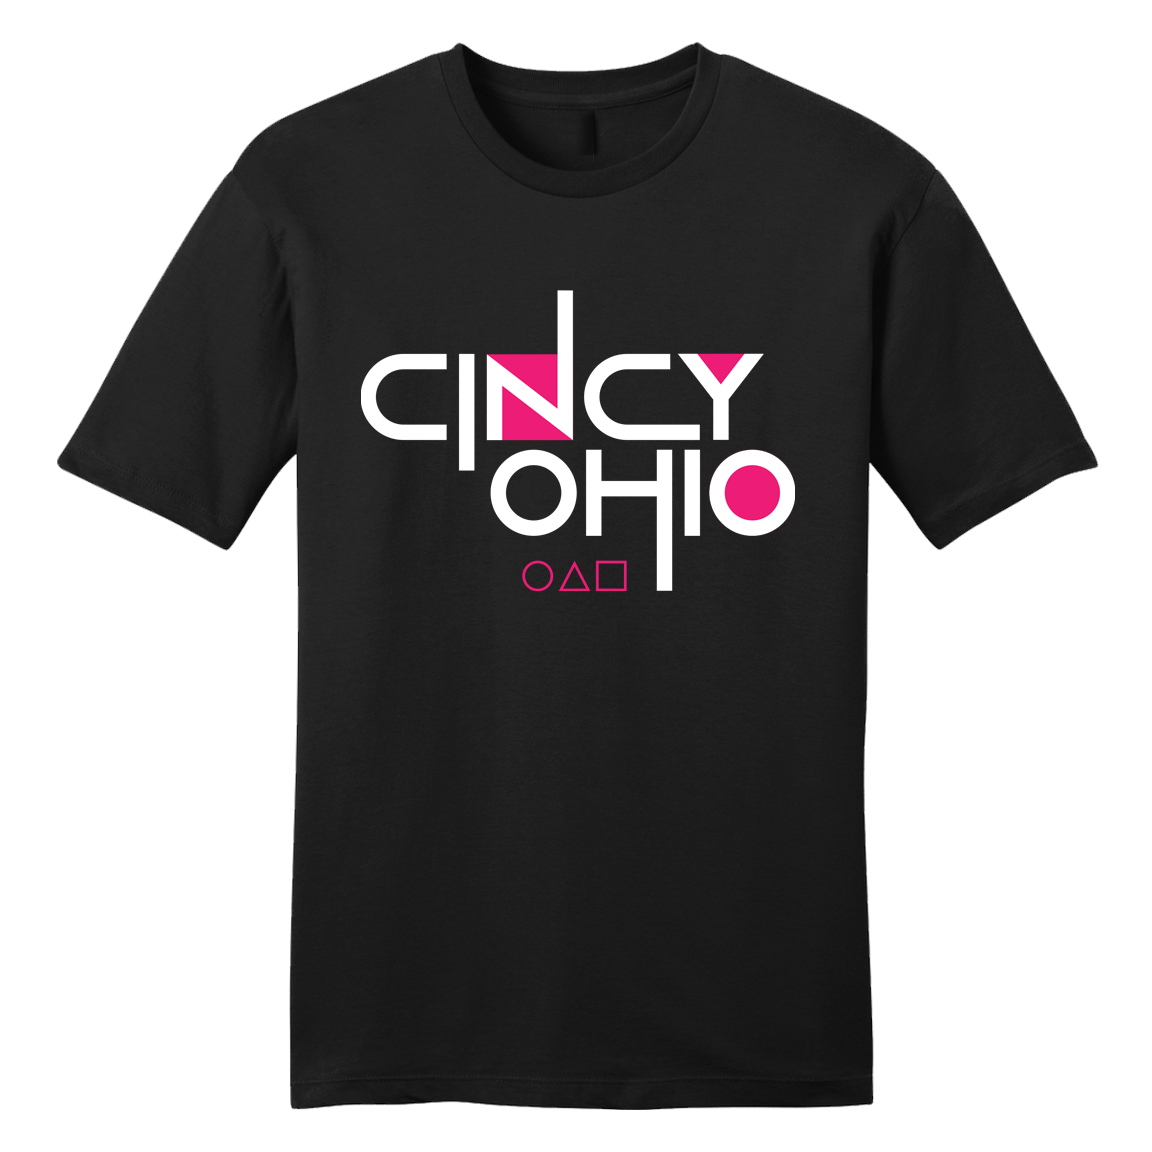 Cincy Ohio Squid tee